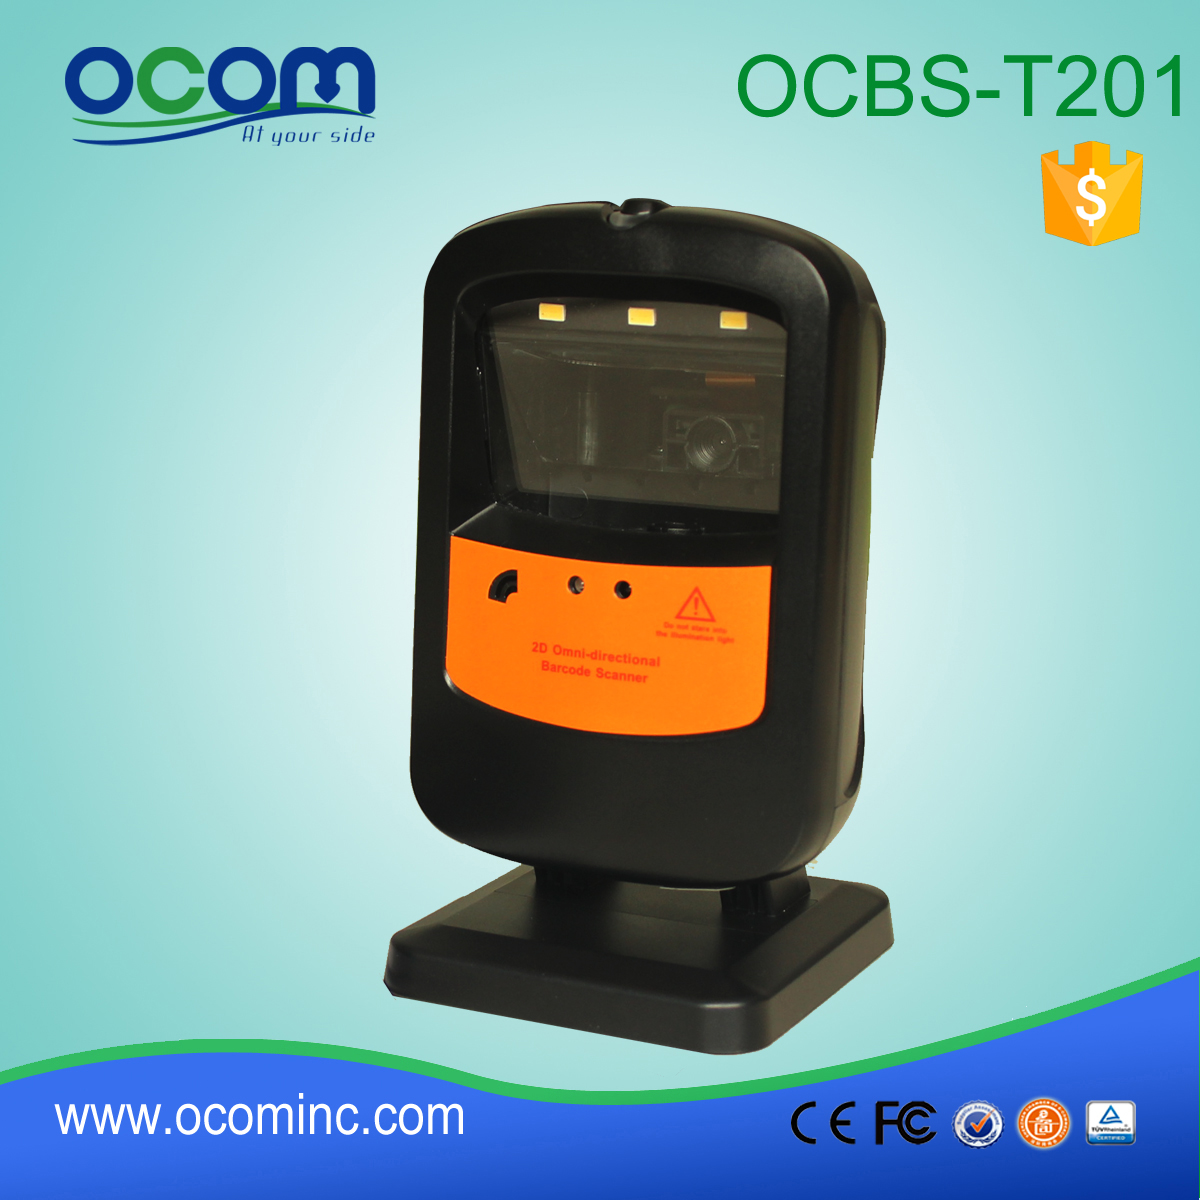 OCBS-T201: omnidirectionnelle scanner de codes barres RS232, code à barres Scanner d'inventaire